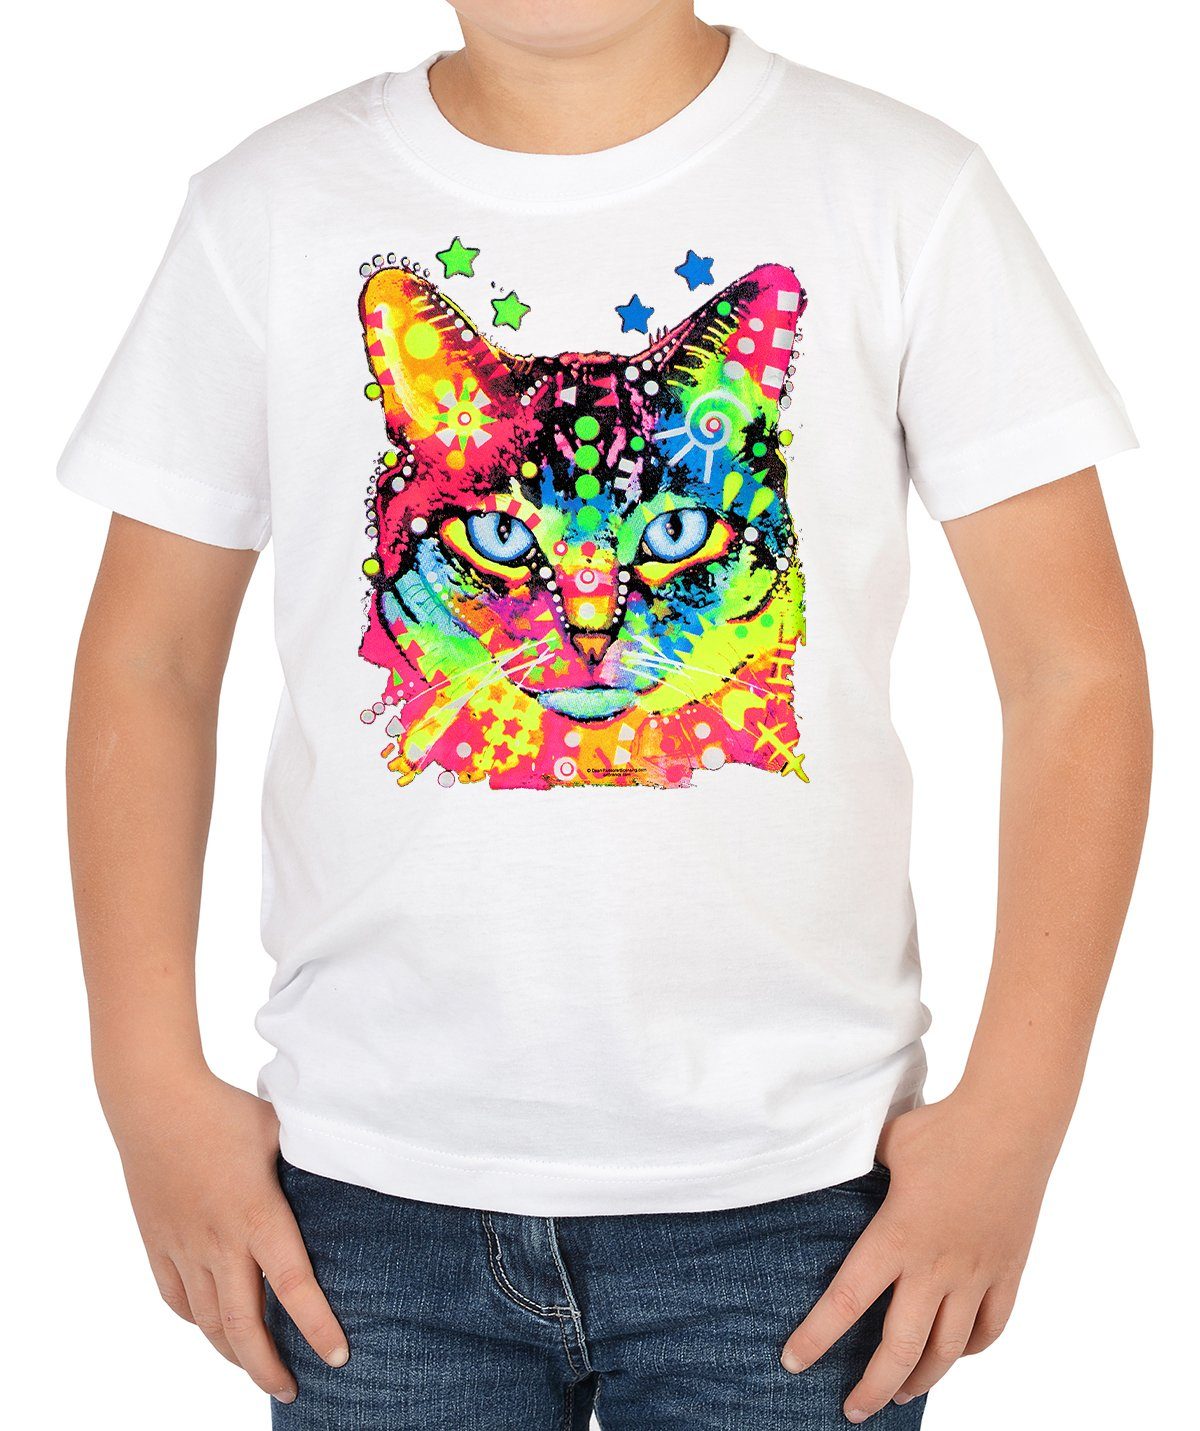 Tini - Print-Shirt Motiv Kindershirt Katzenmotiv Eyes buntes Katzen Kindershirt : Shirts Blue